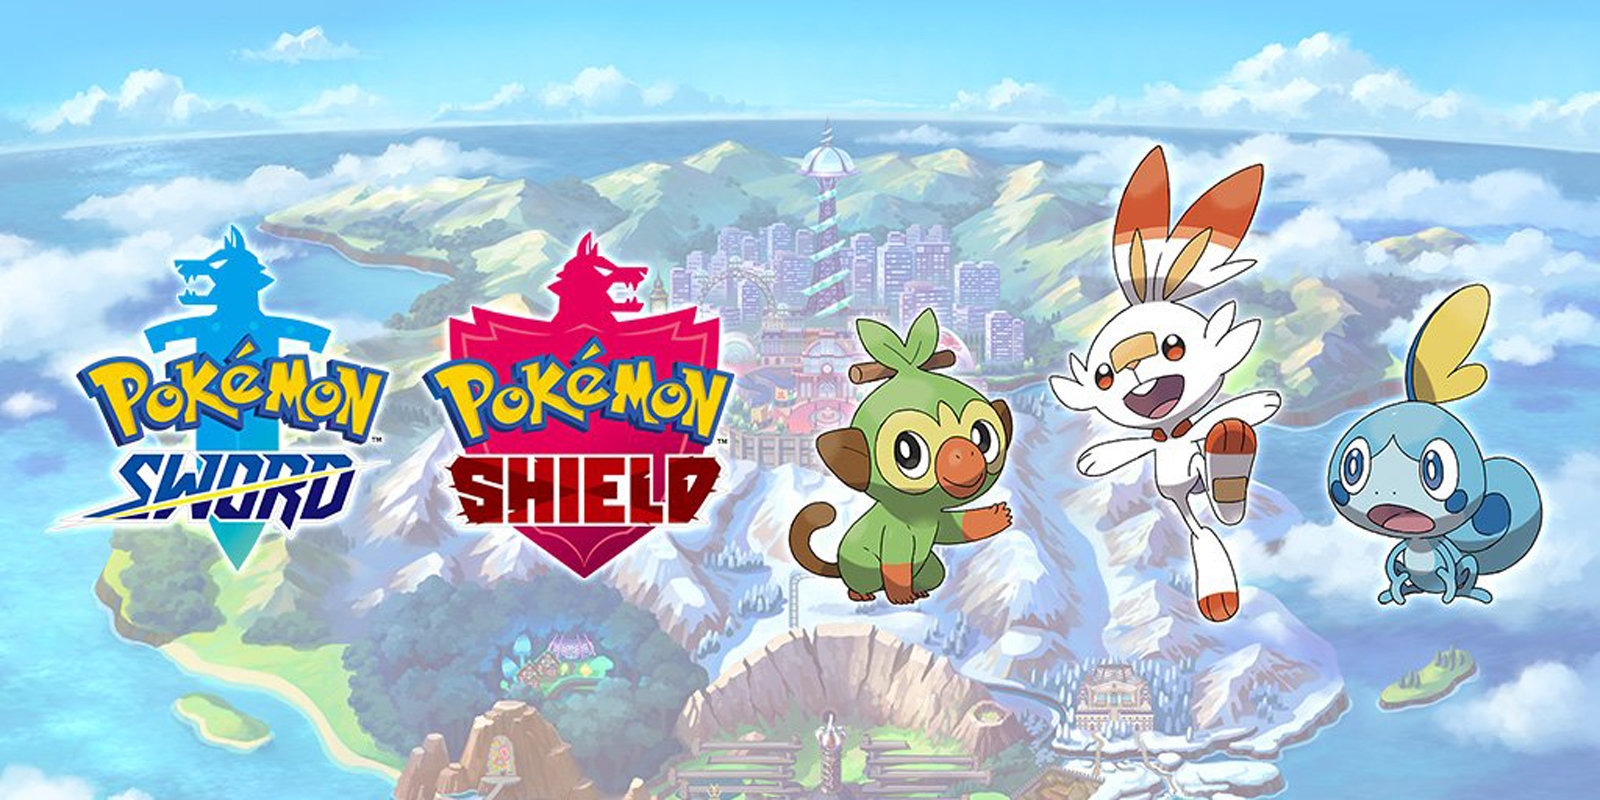 'Pokémon Sword' and 'Shield' arrive on Switch late 2019 | DeviceDaily.com